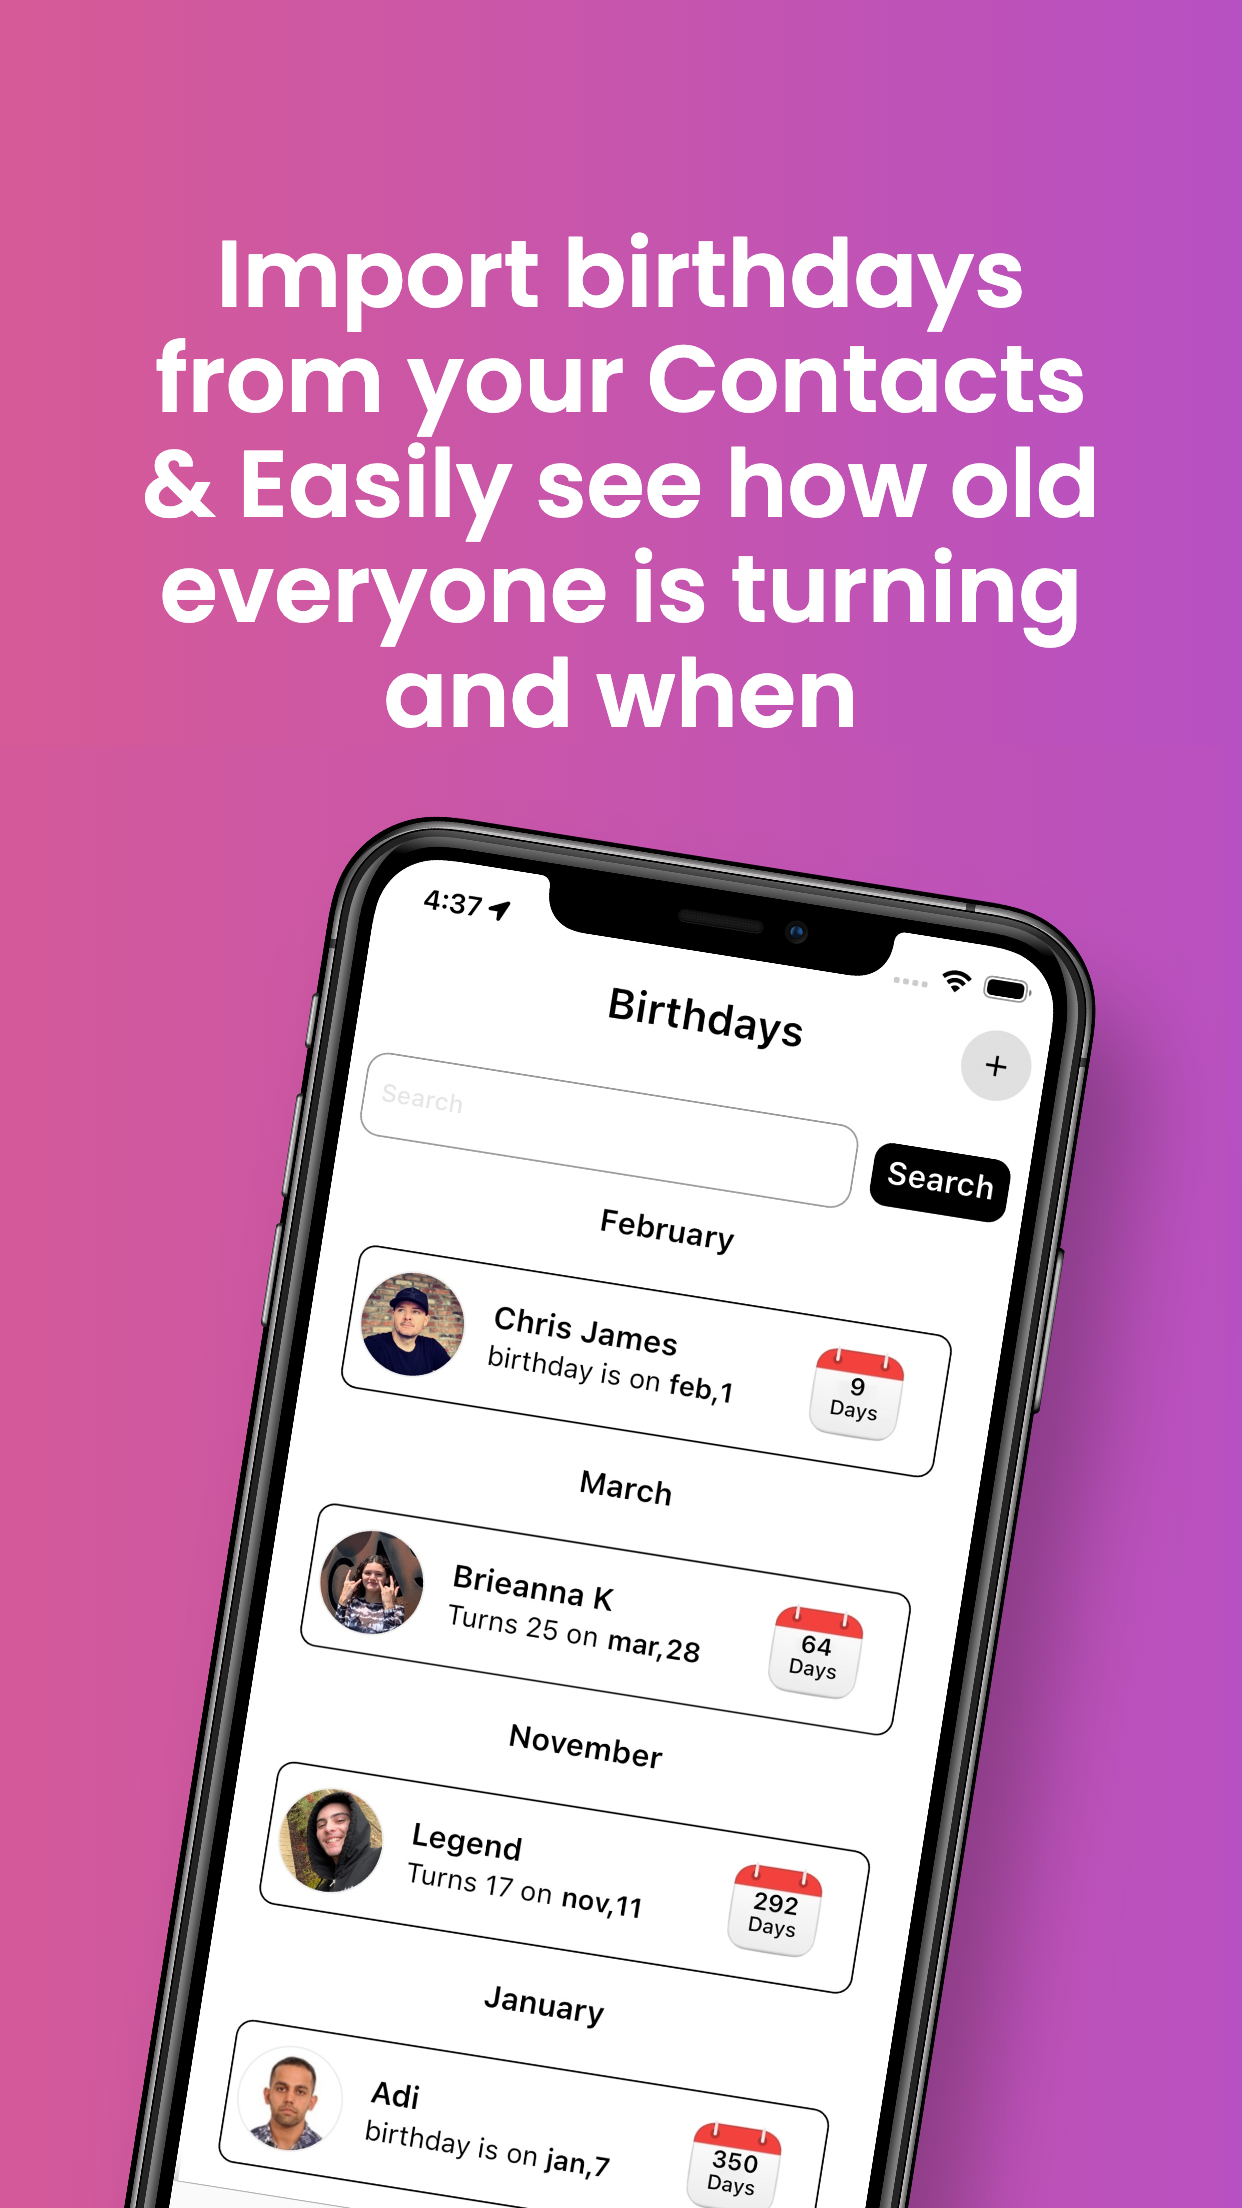 App screenshot showcasing birthday deals